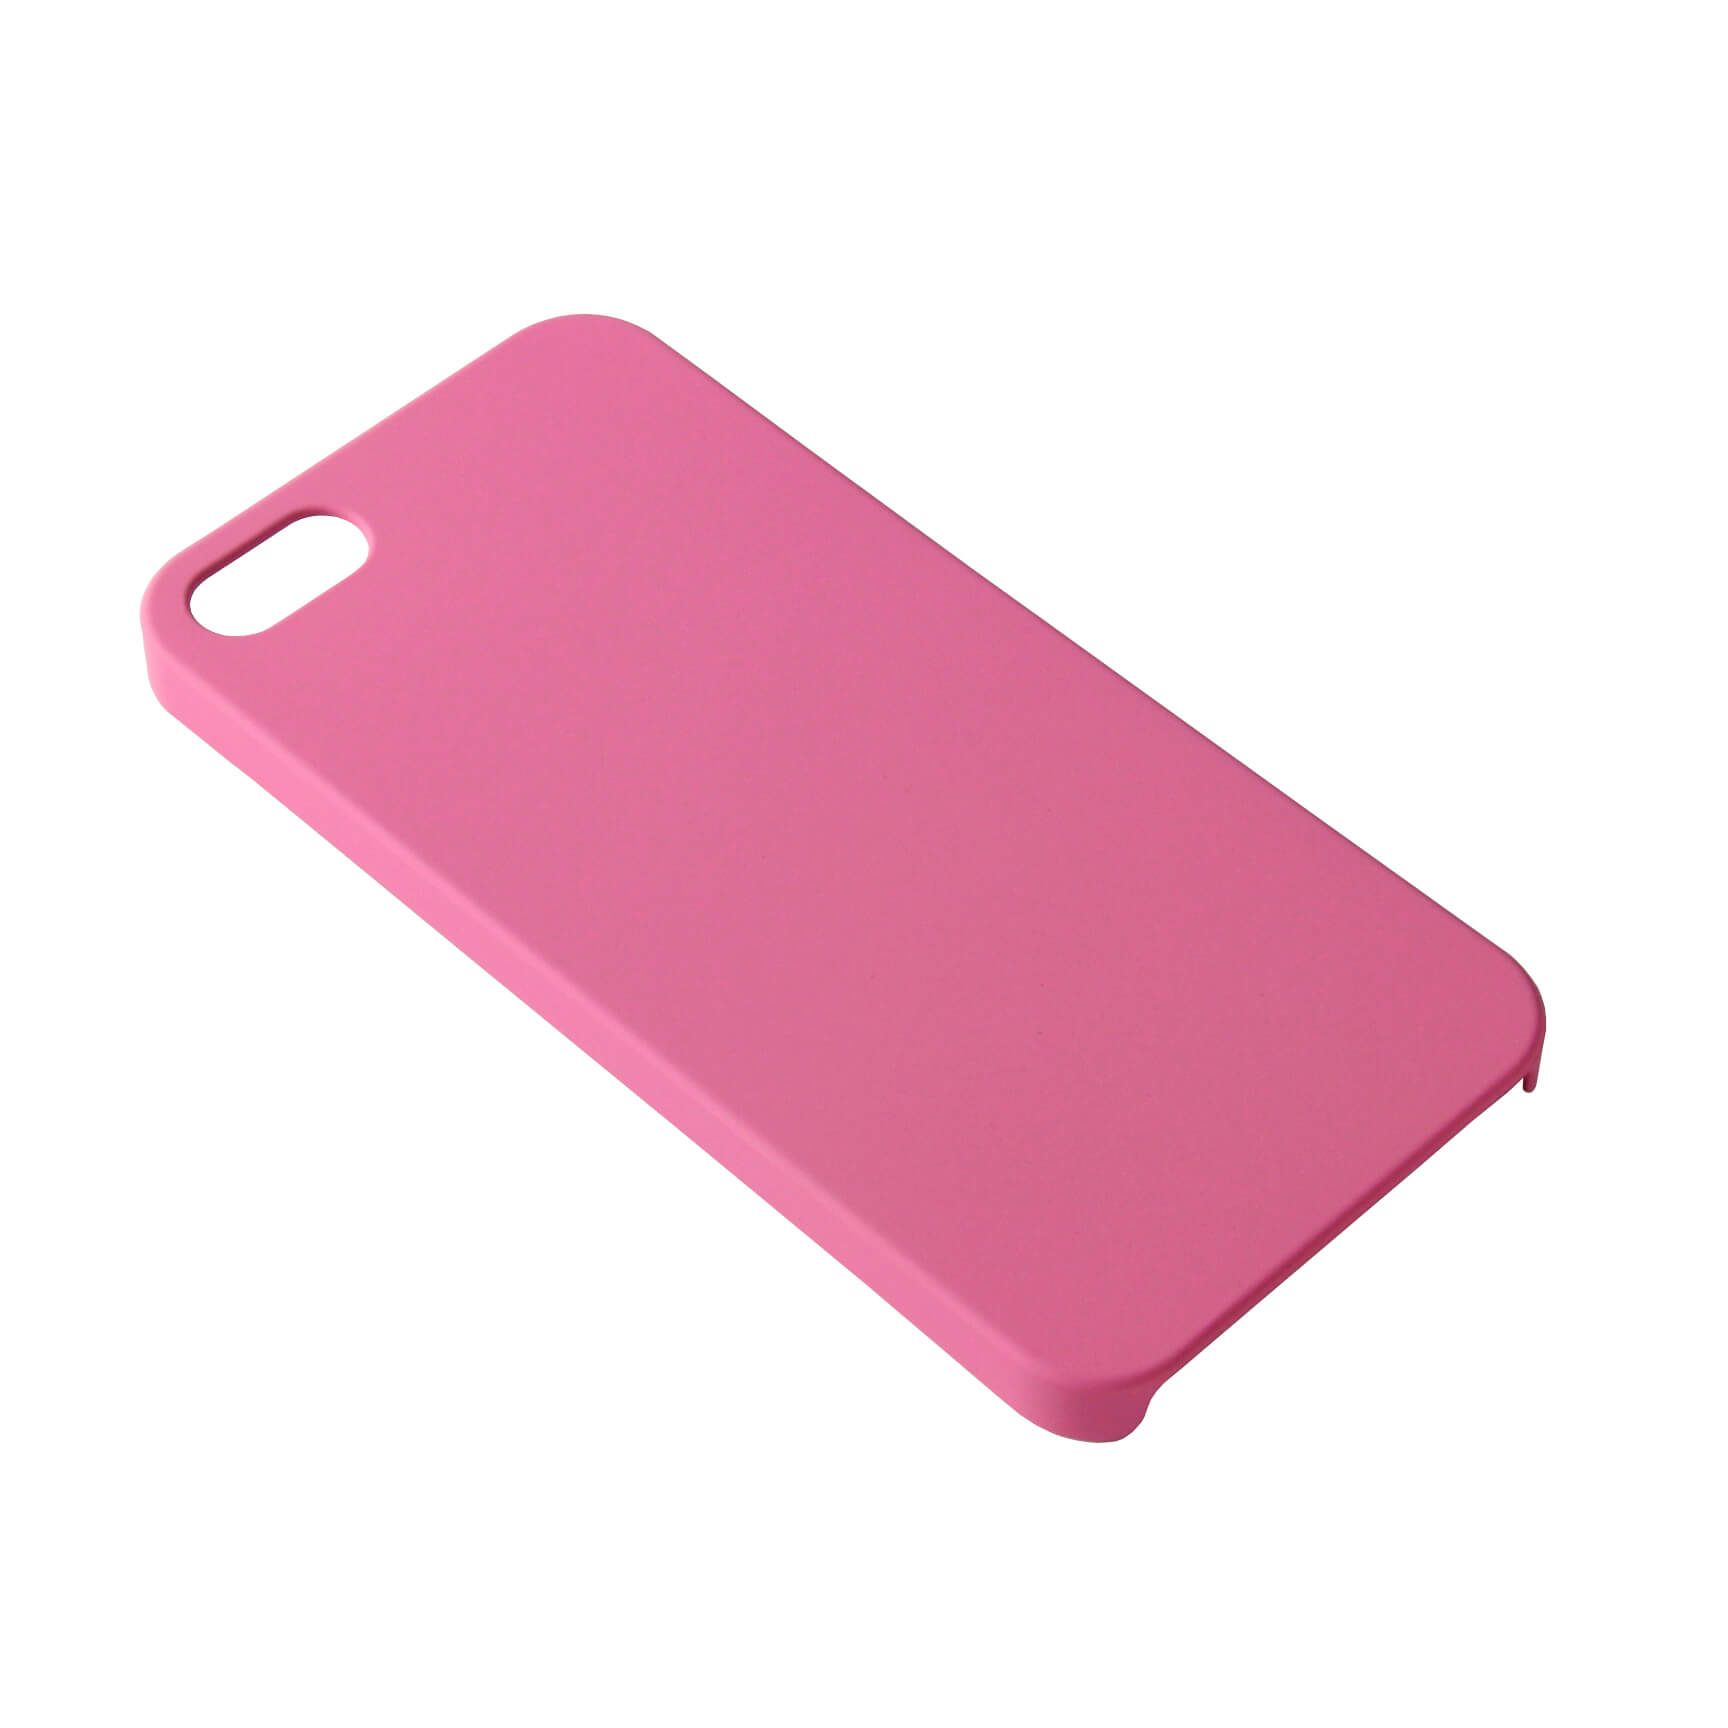 Phone Case Pink - iPhone 5/SE 